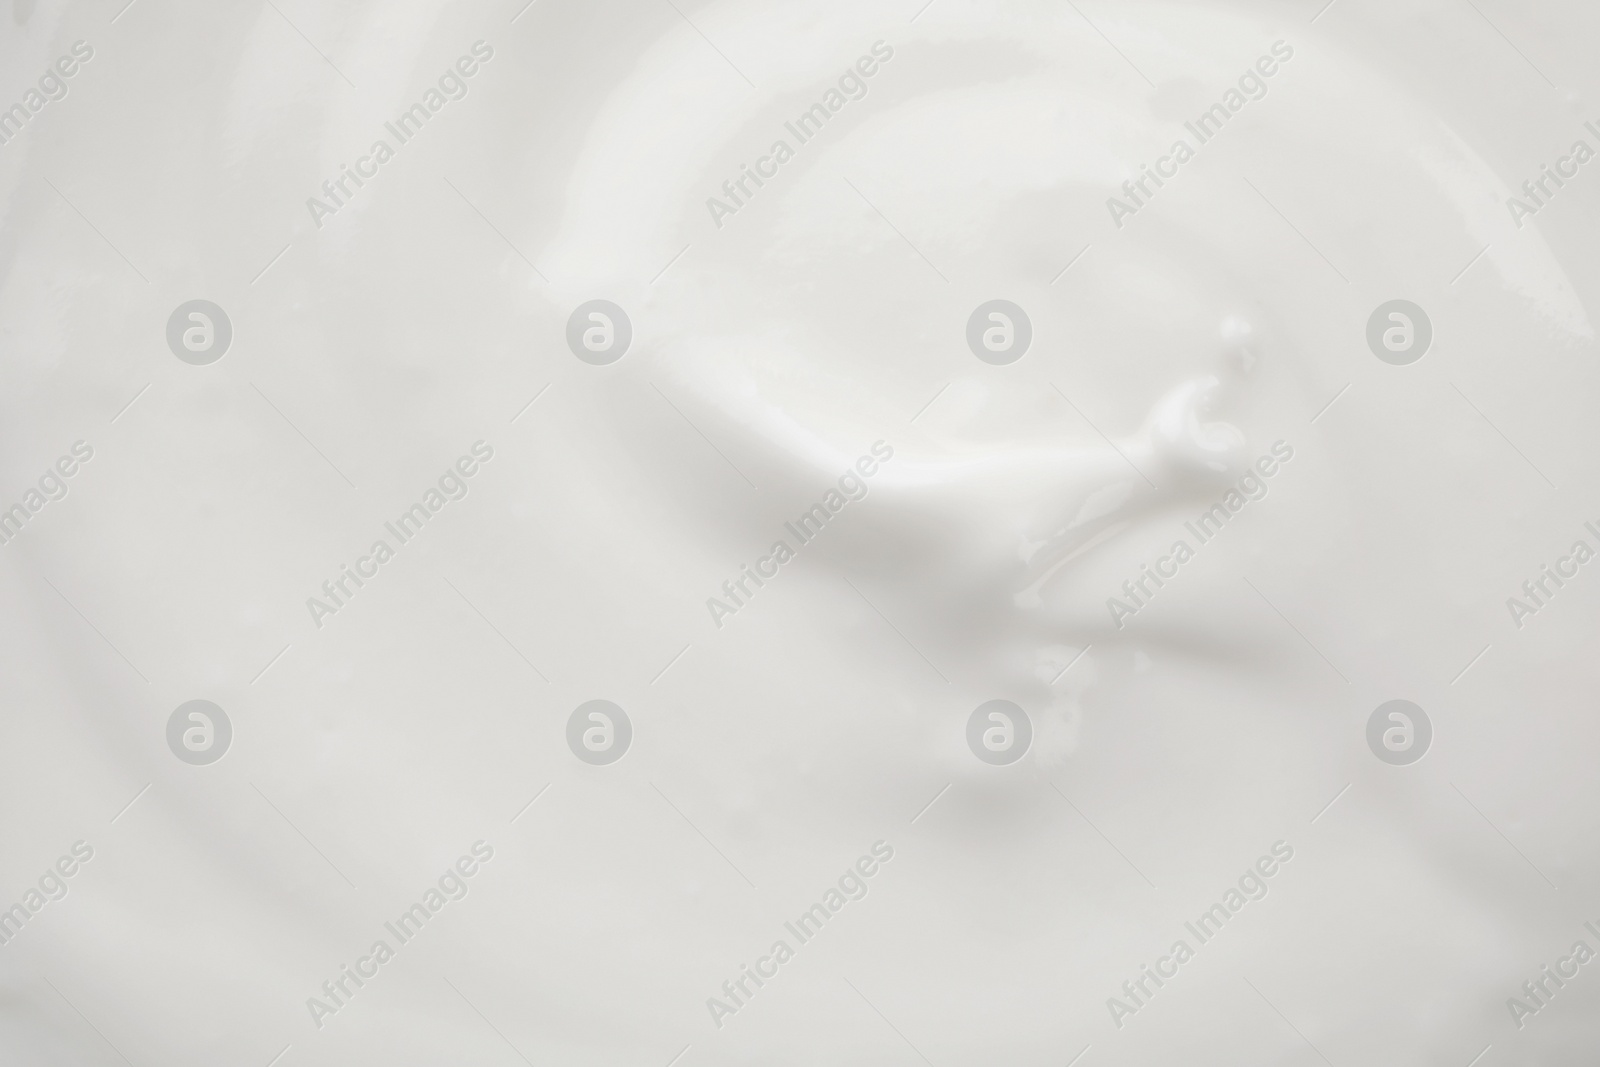 Photo of Delicious creamy yogurt as background, closeup view